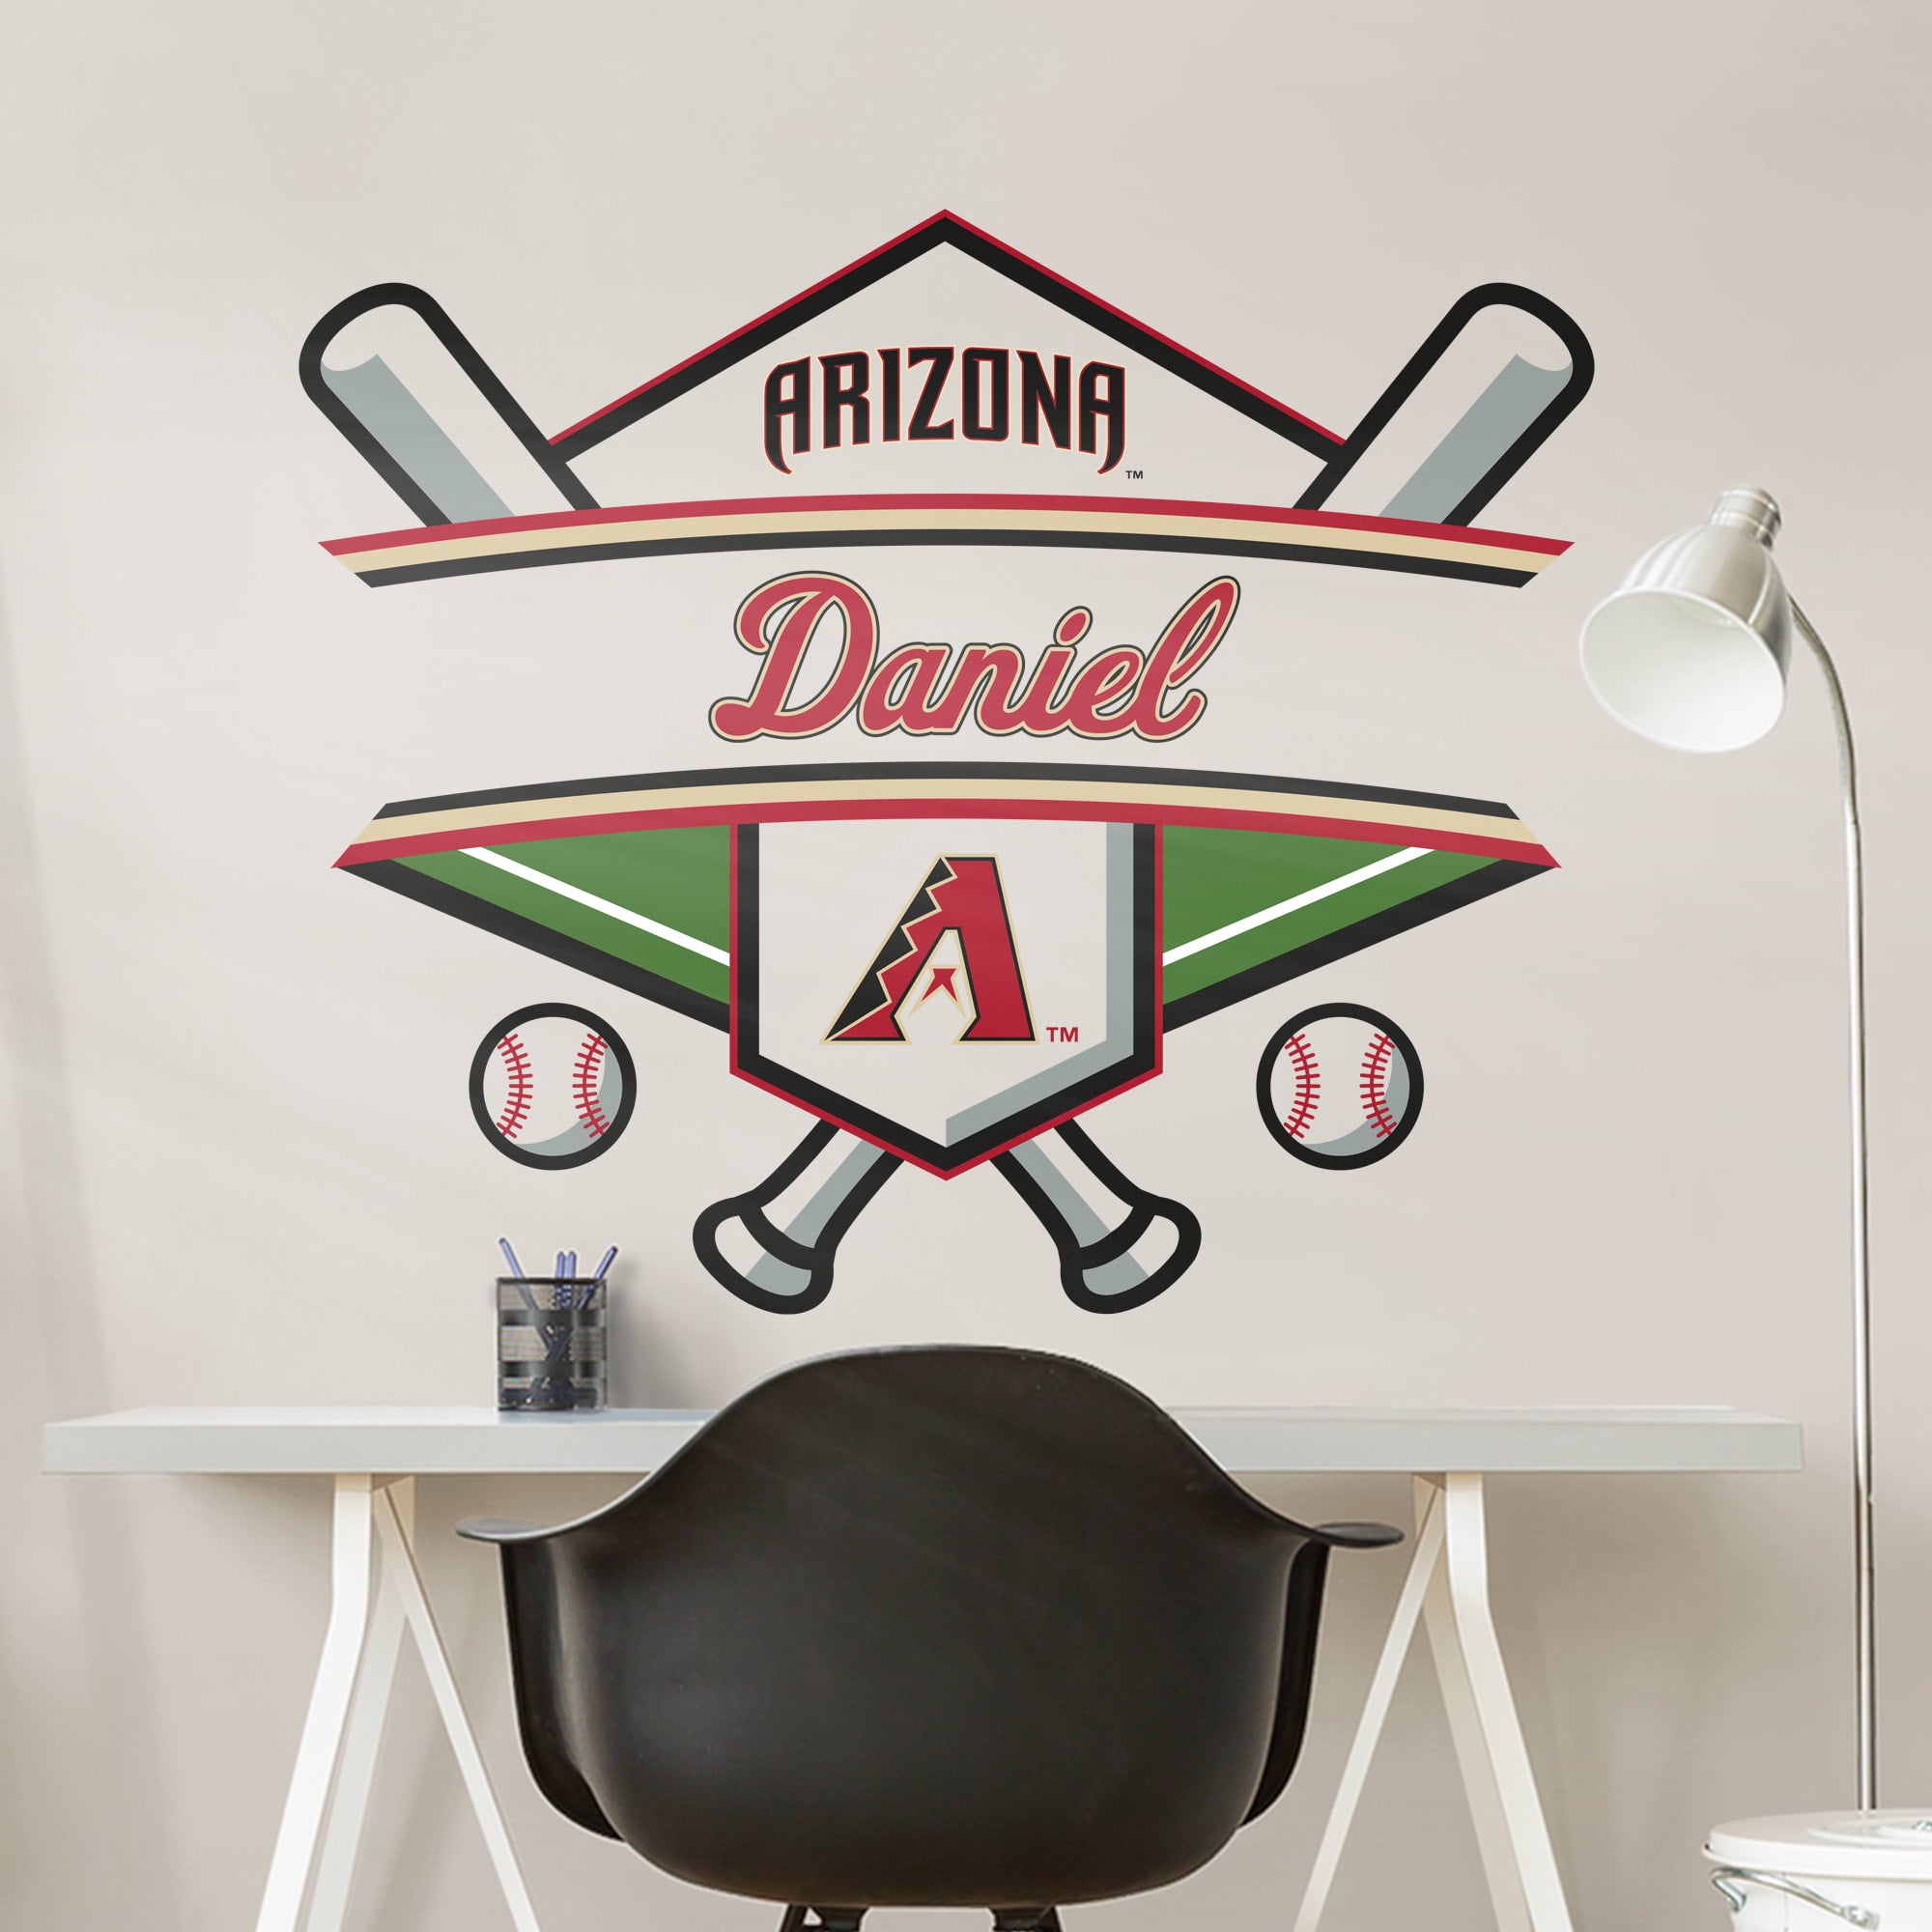 Arizona Diamondbacks: Personalized Name - Officially Licensed MLB Transfer Decal 45.0"W x 38.0"H by Fathead | Vinyl